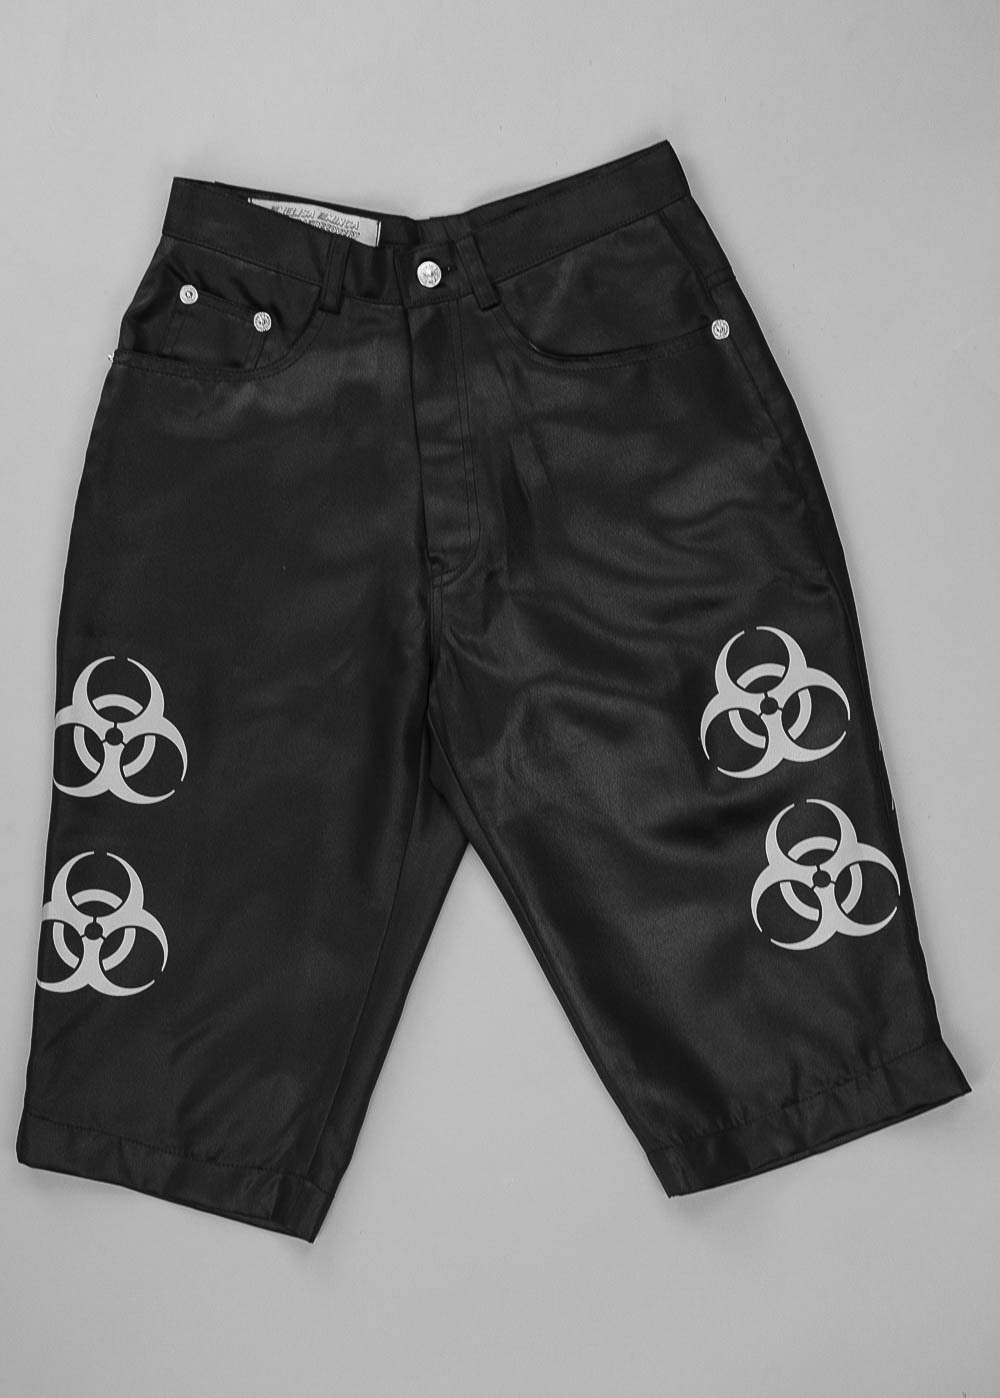 Toxic Shorts 1